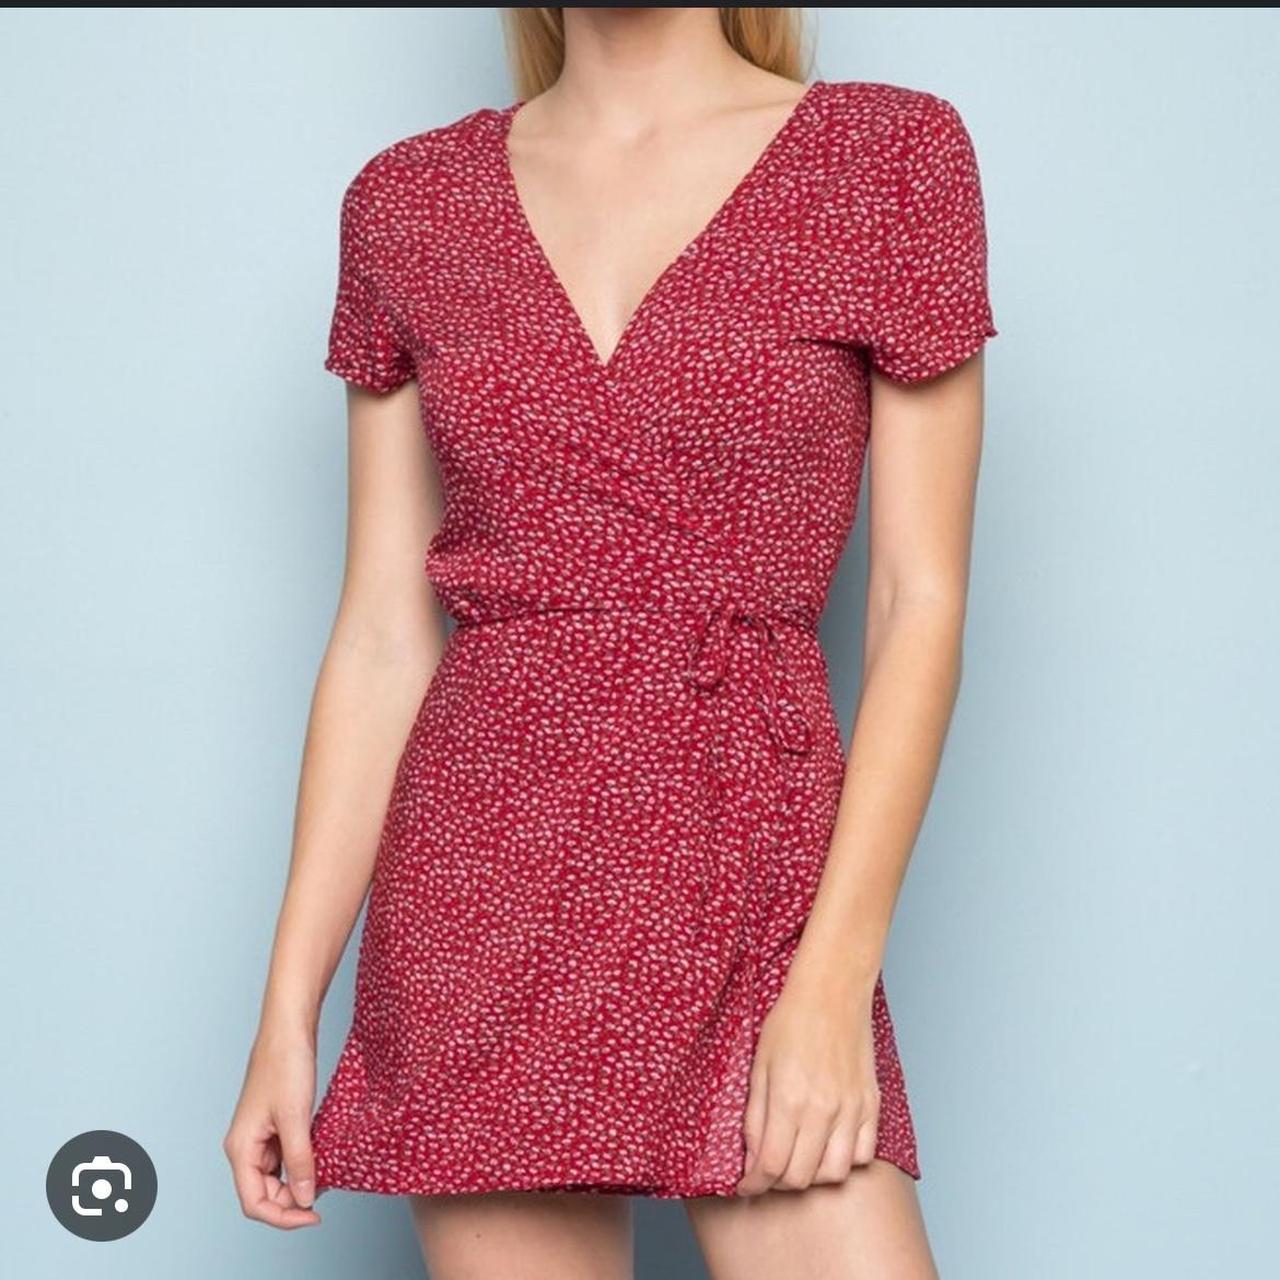 Brandy Melville's Robbie dress. Should I make it shorter? I'd hate to do it  since it's Brandy but I wanna look good! I'm 5'0. : r/PetiteFashionAdvice